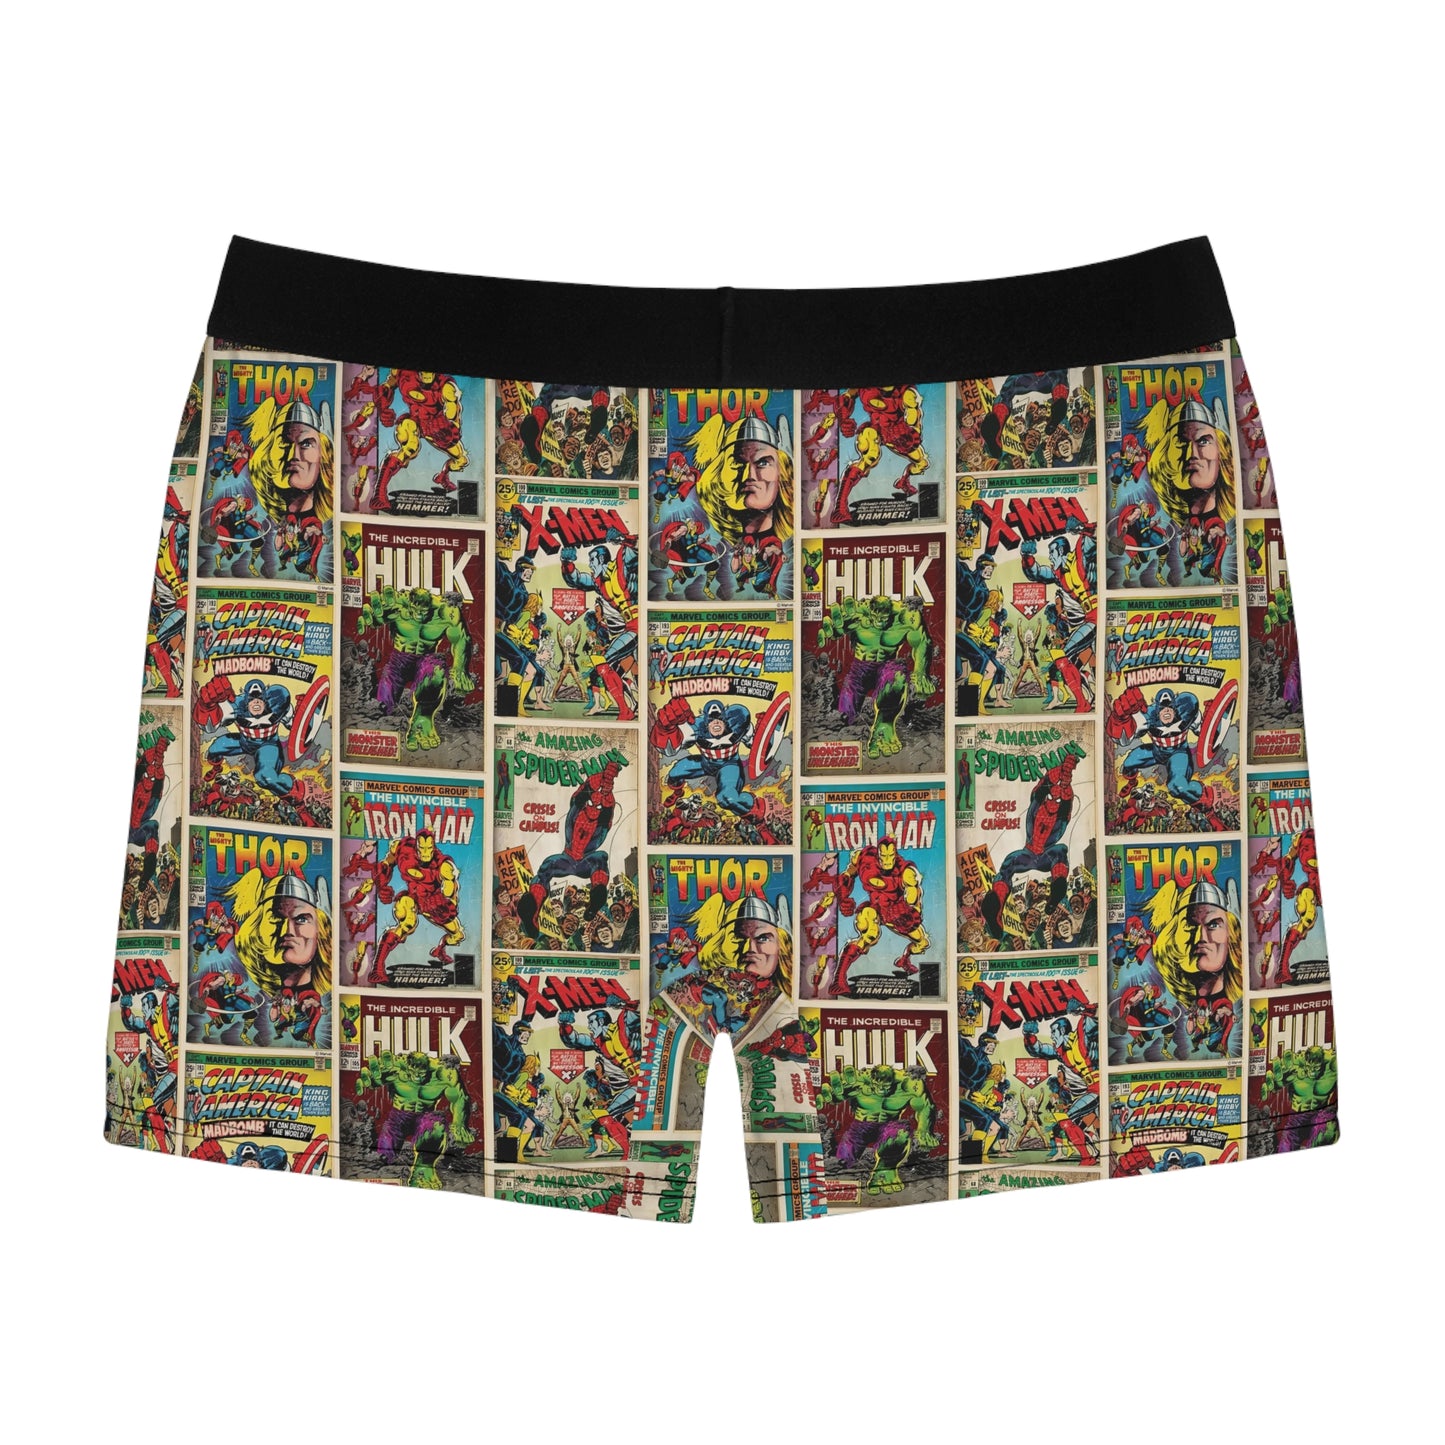 Marvel Comic Book Cover Collage Men's Boxer Briefs Underwear